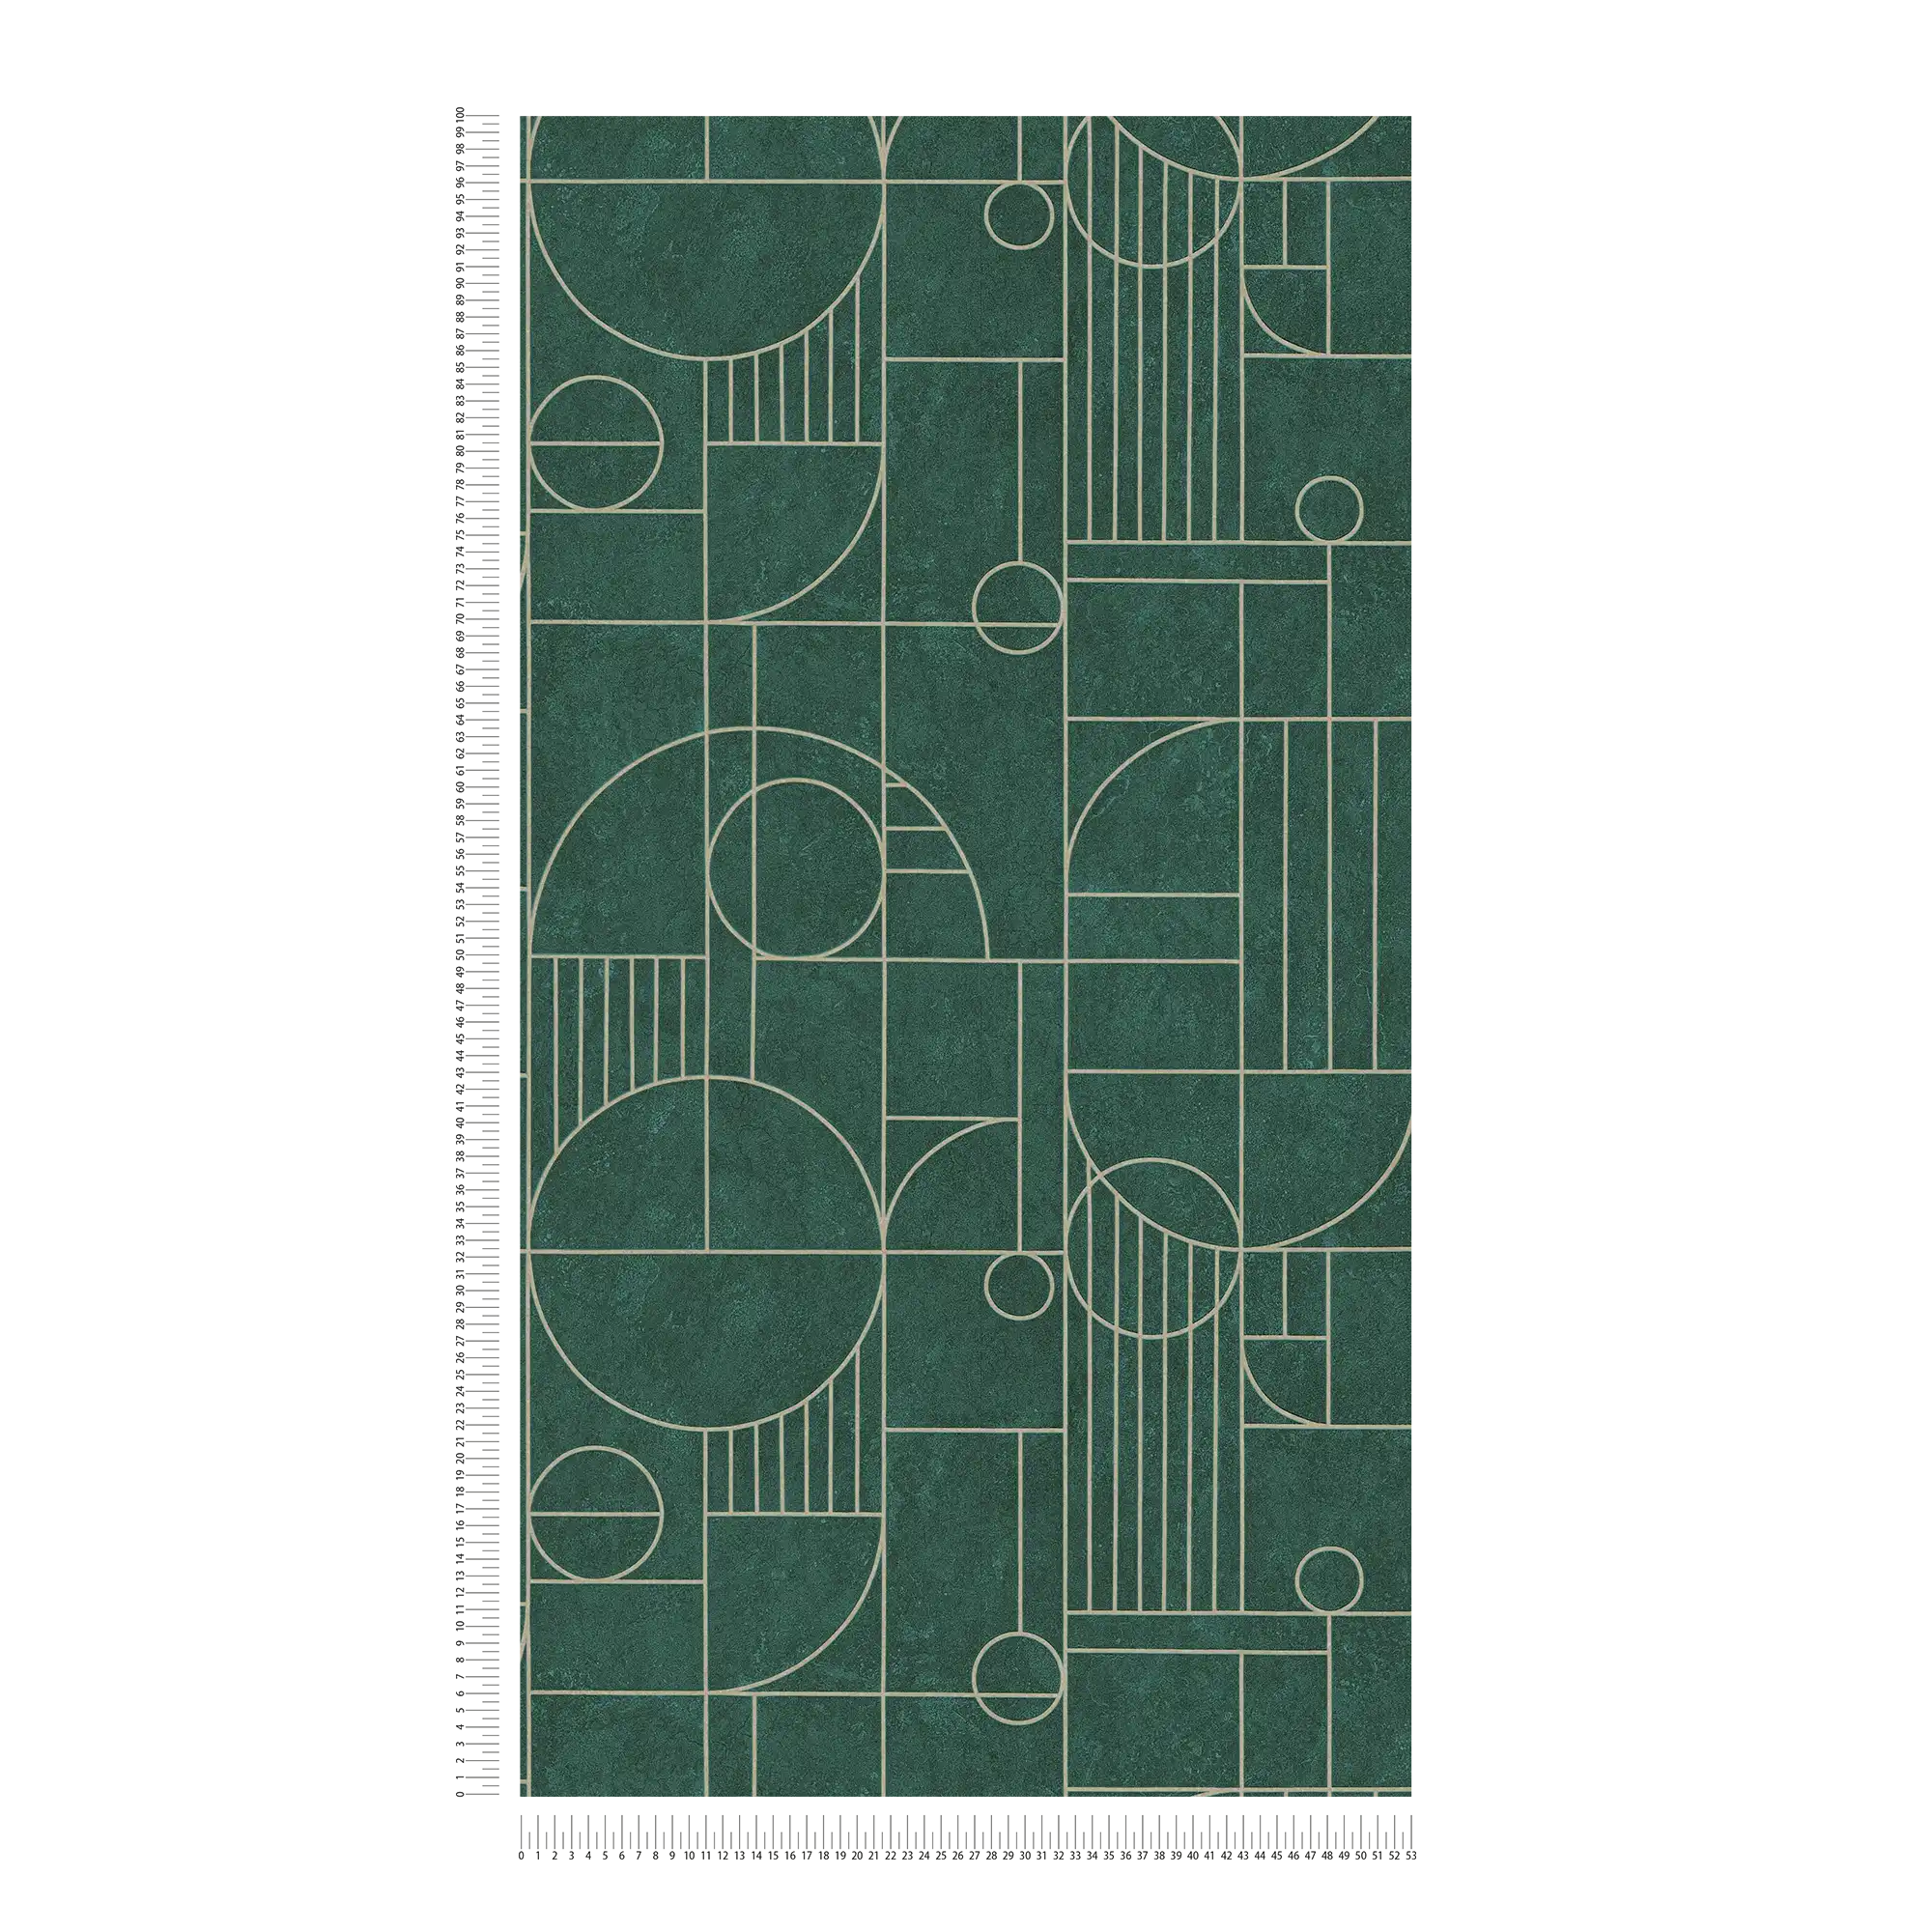             Fliesenoptik Tapete Art Deco Design marmoriert – Grün, Metallic
        